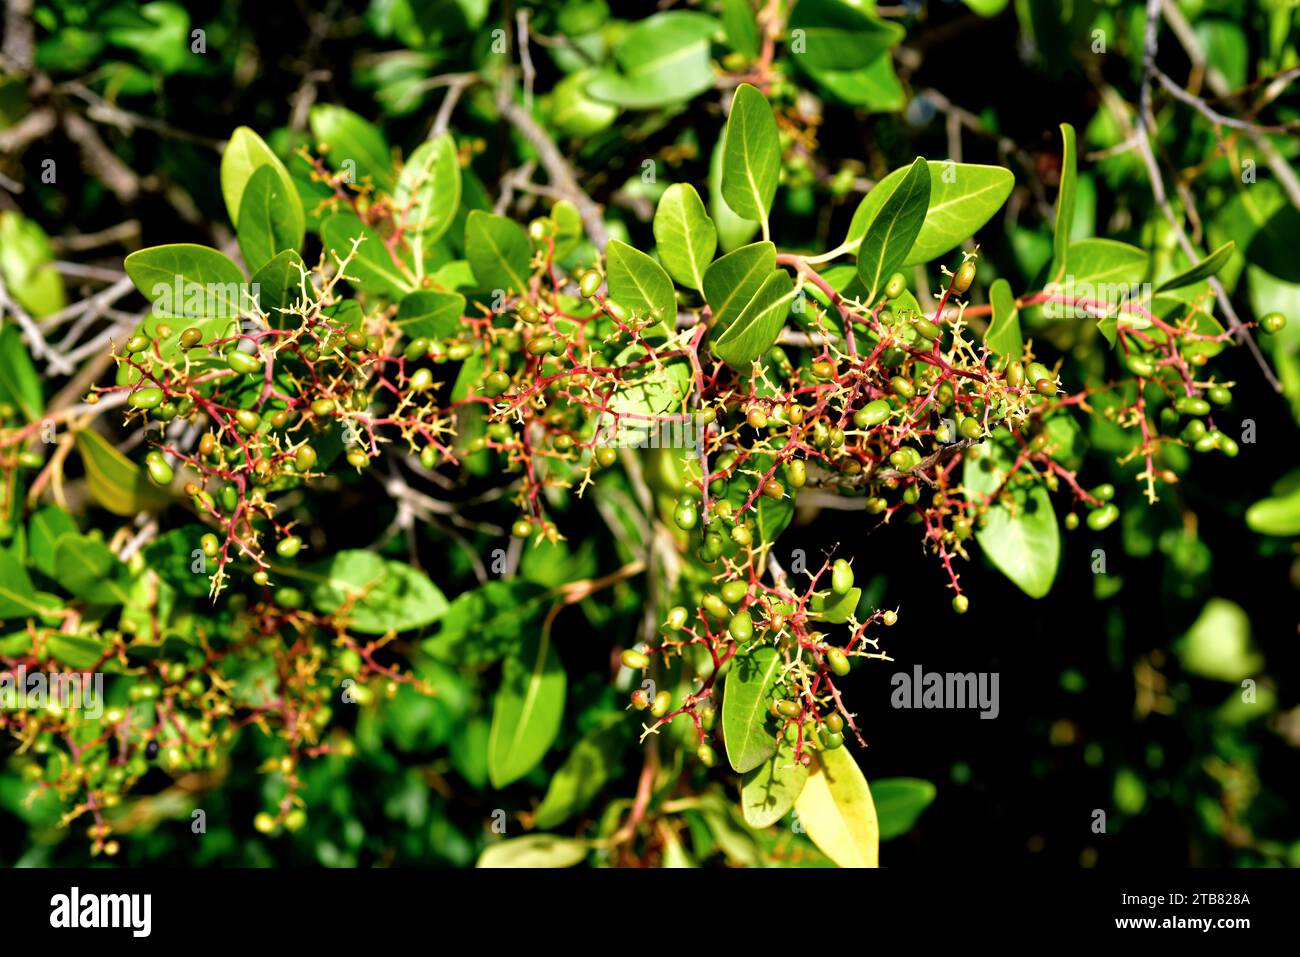 White pear (Apodytes dimidiata) is a small tree native to southern Africa. Fruits detail. Stock Photo